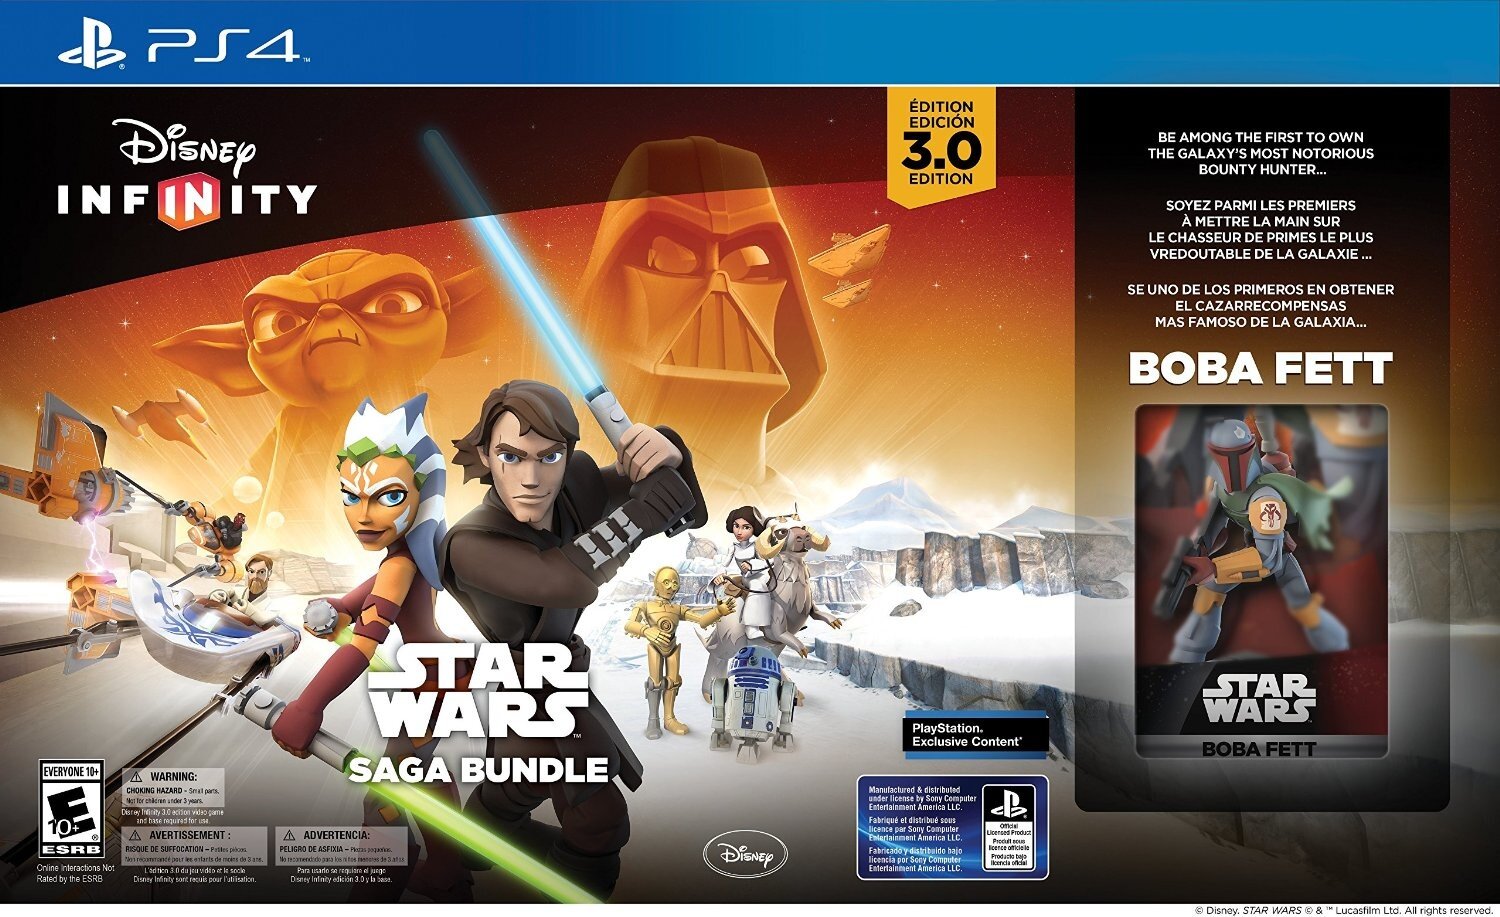 Plataforma Disney Infinity 3.0 Star Wars para PS4